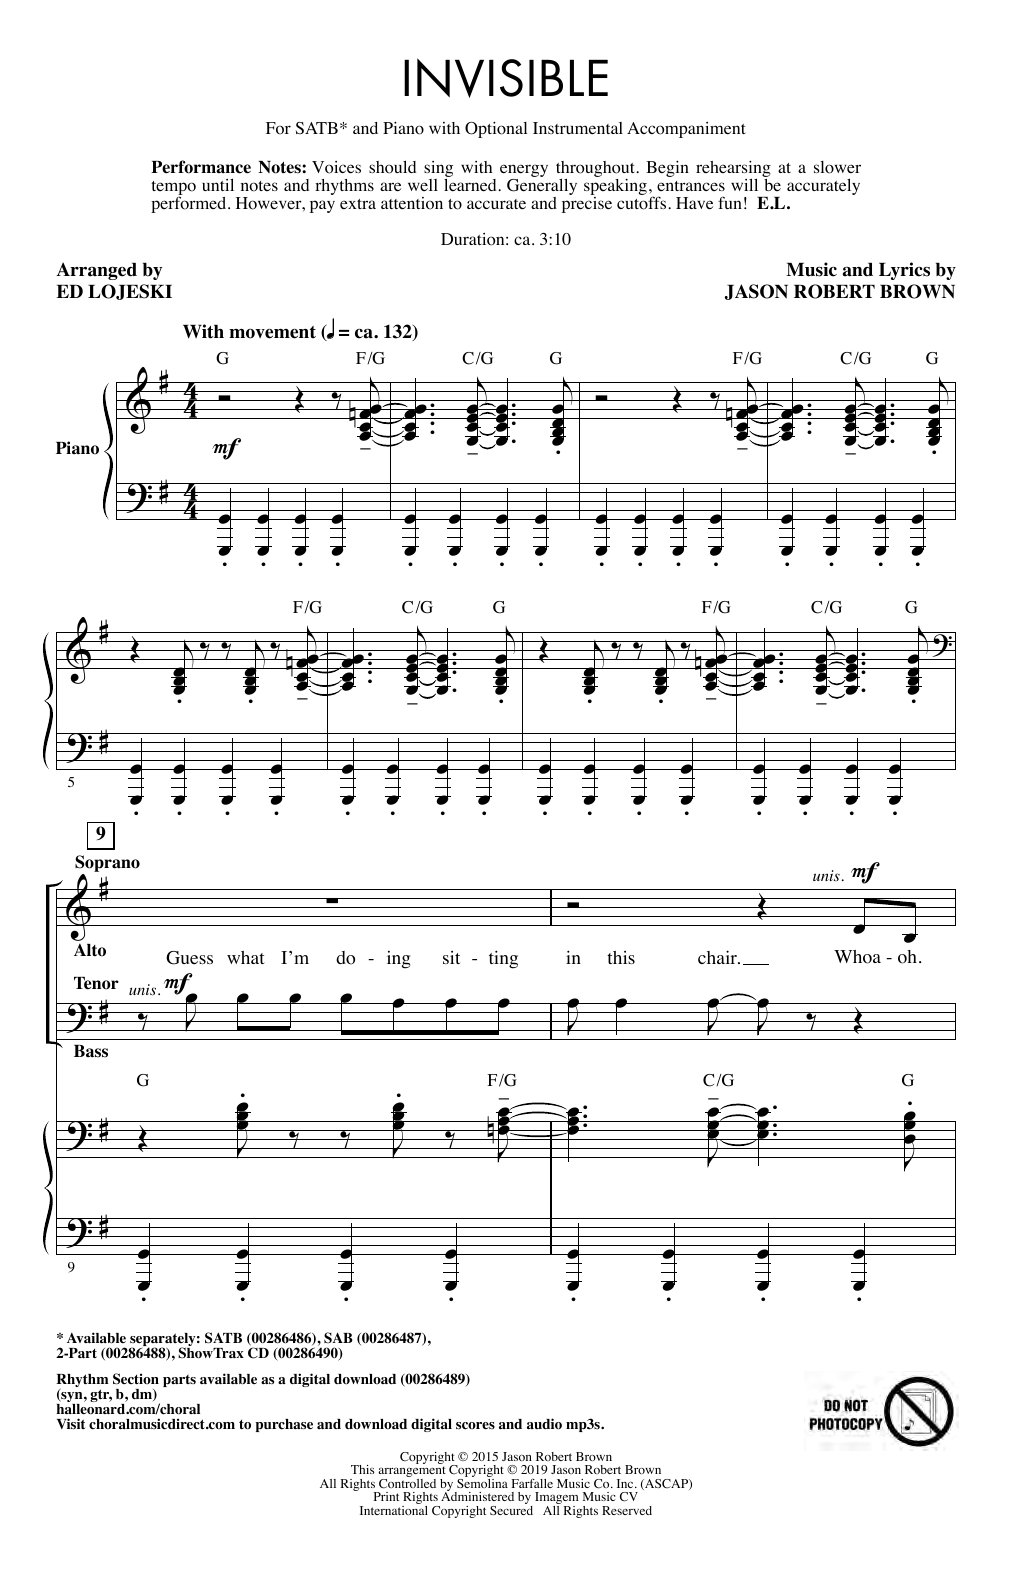 Jason Robert Brown Invisible (arr. Ed Lojeski) Sheet Music Notes & Chords for SAB Choir - Download or Print PDF